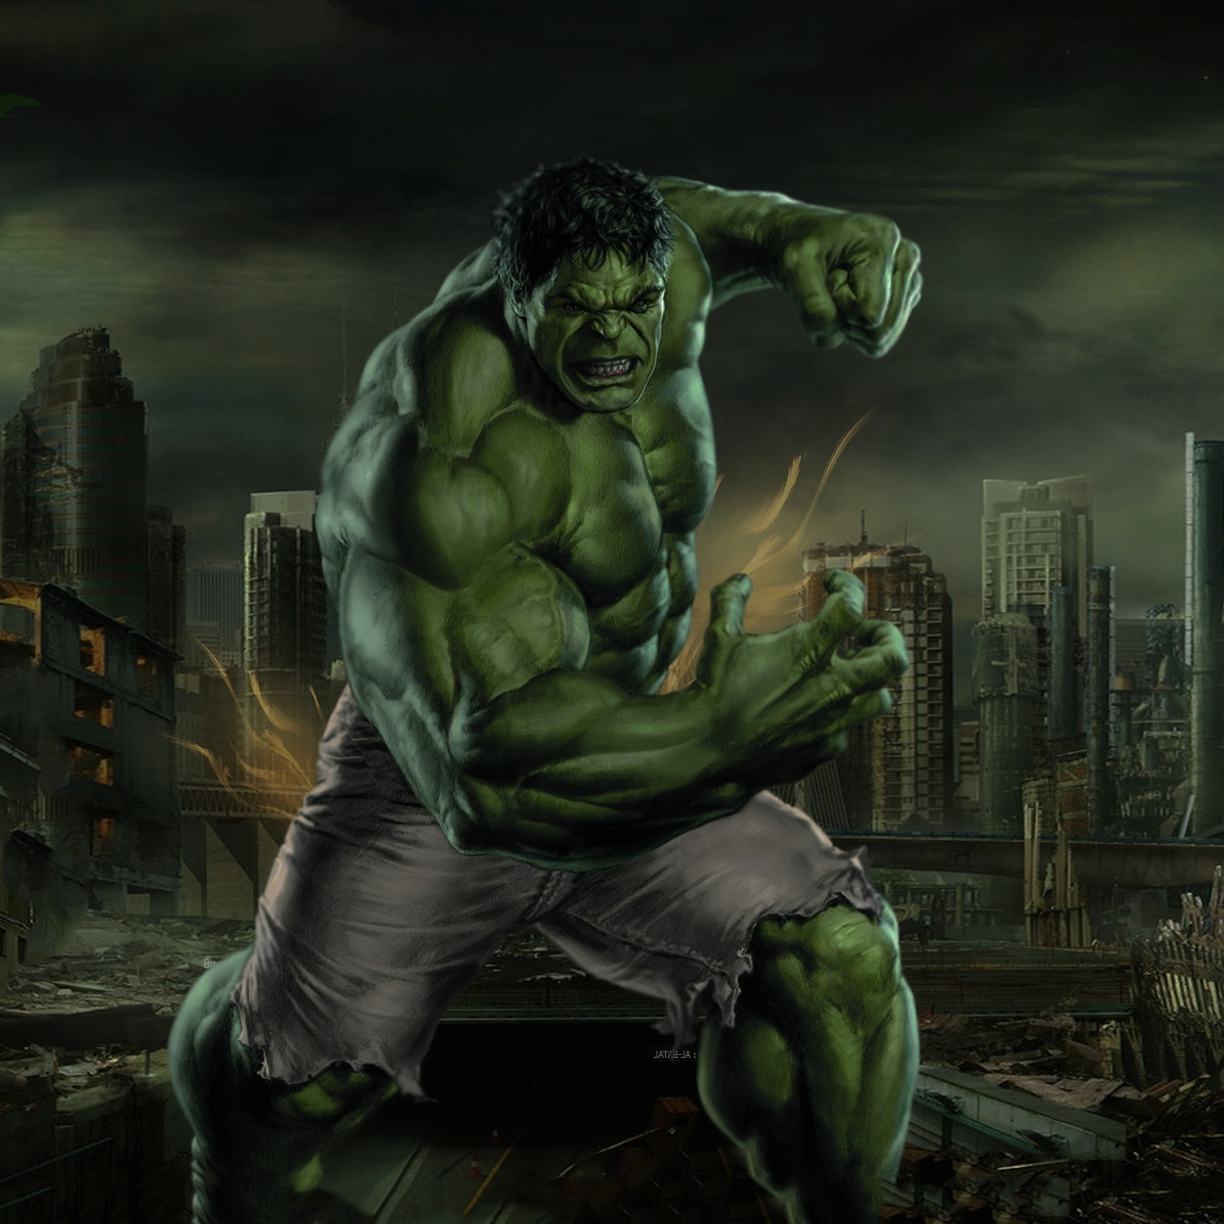 Hulk, green man, smash it wallpaper, hd image, picture, backgrounds, 6877f2...